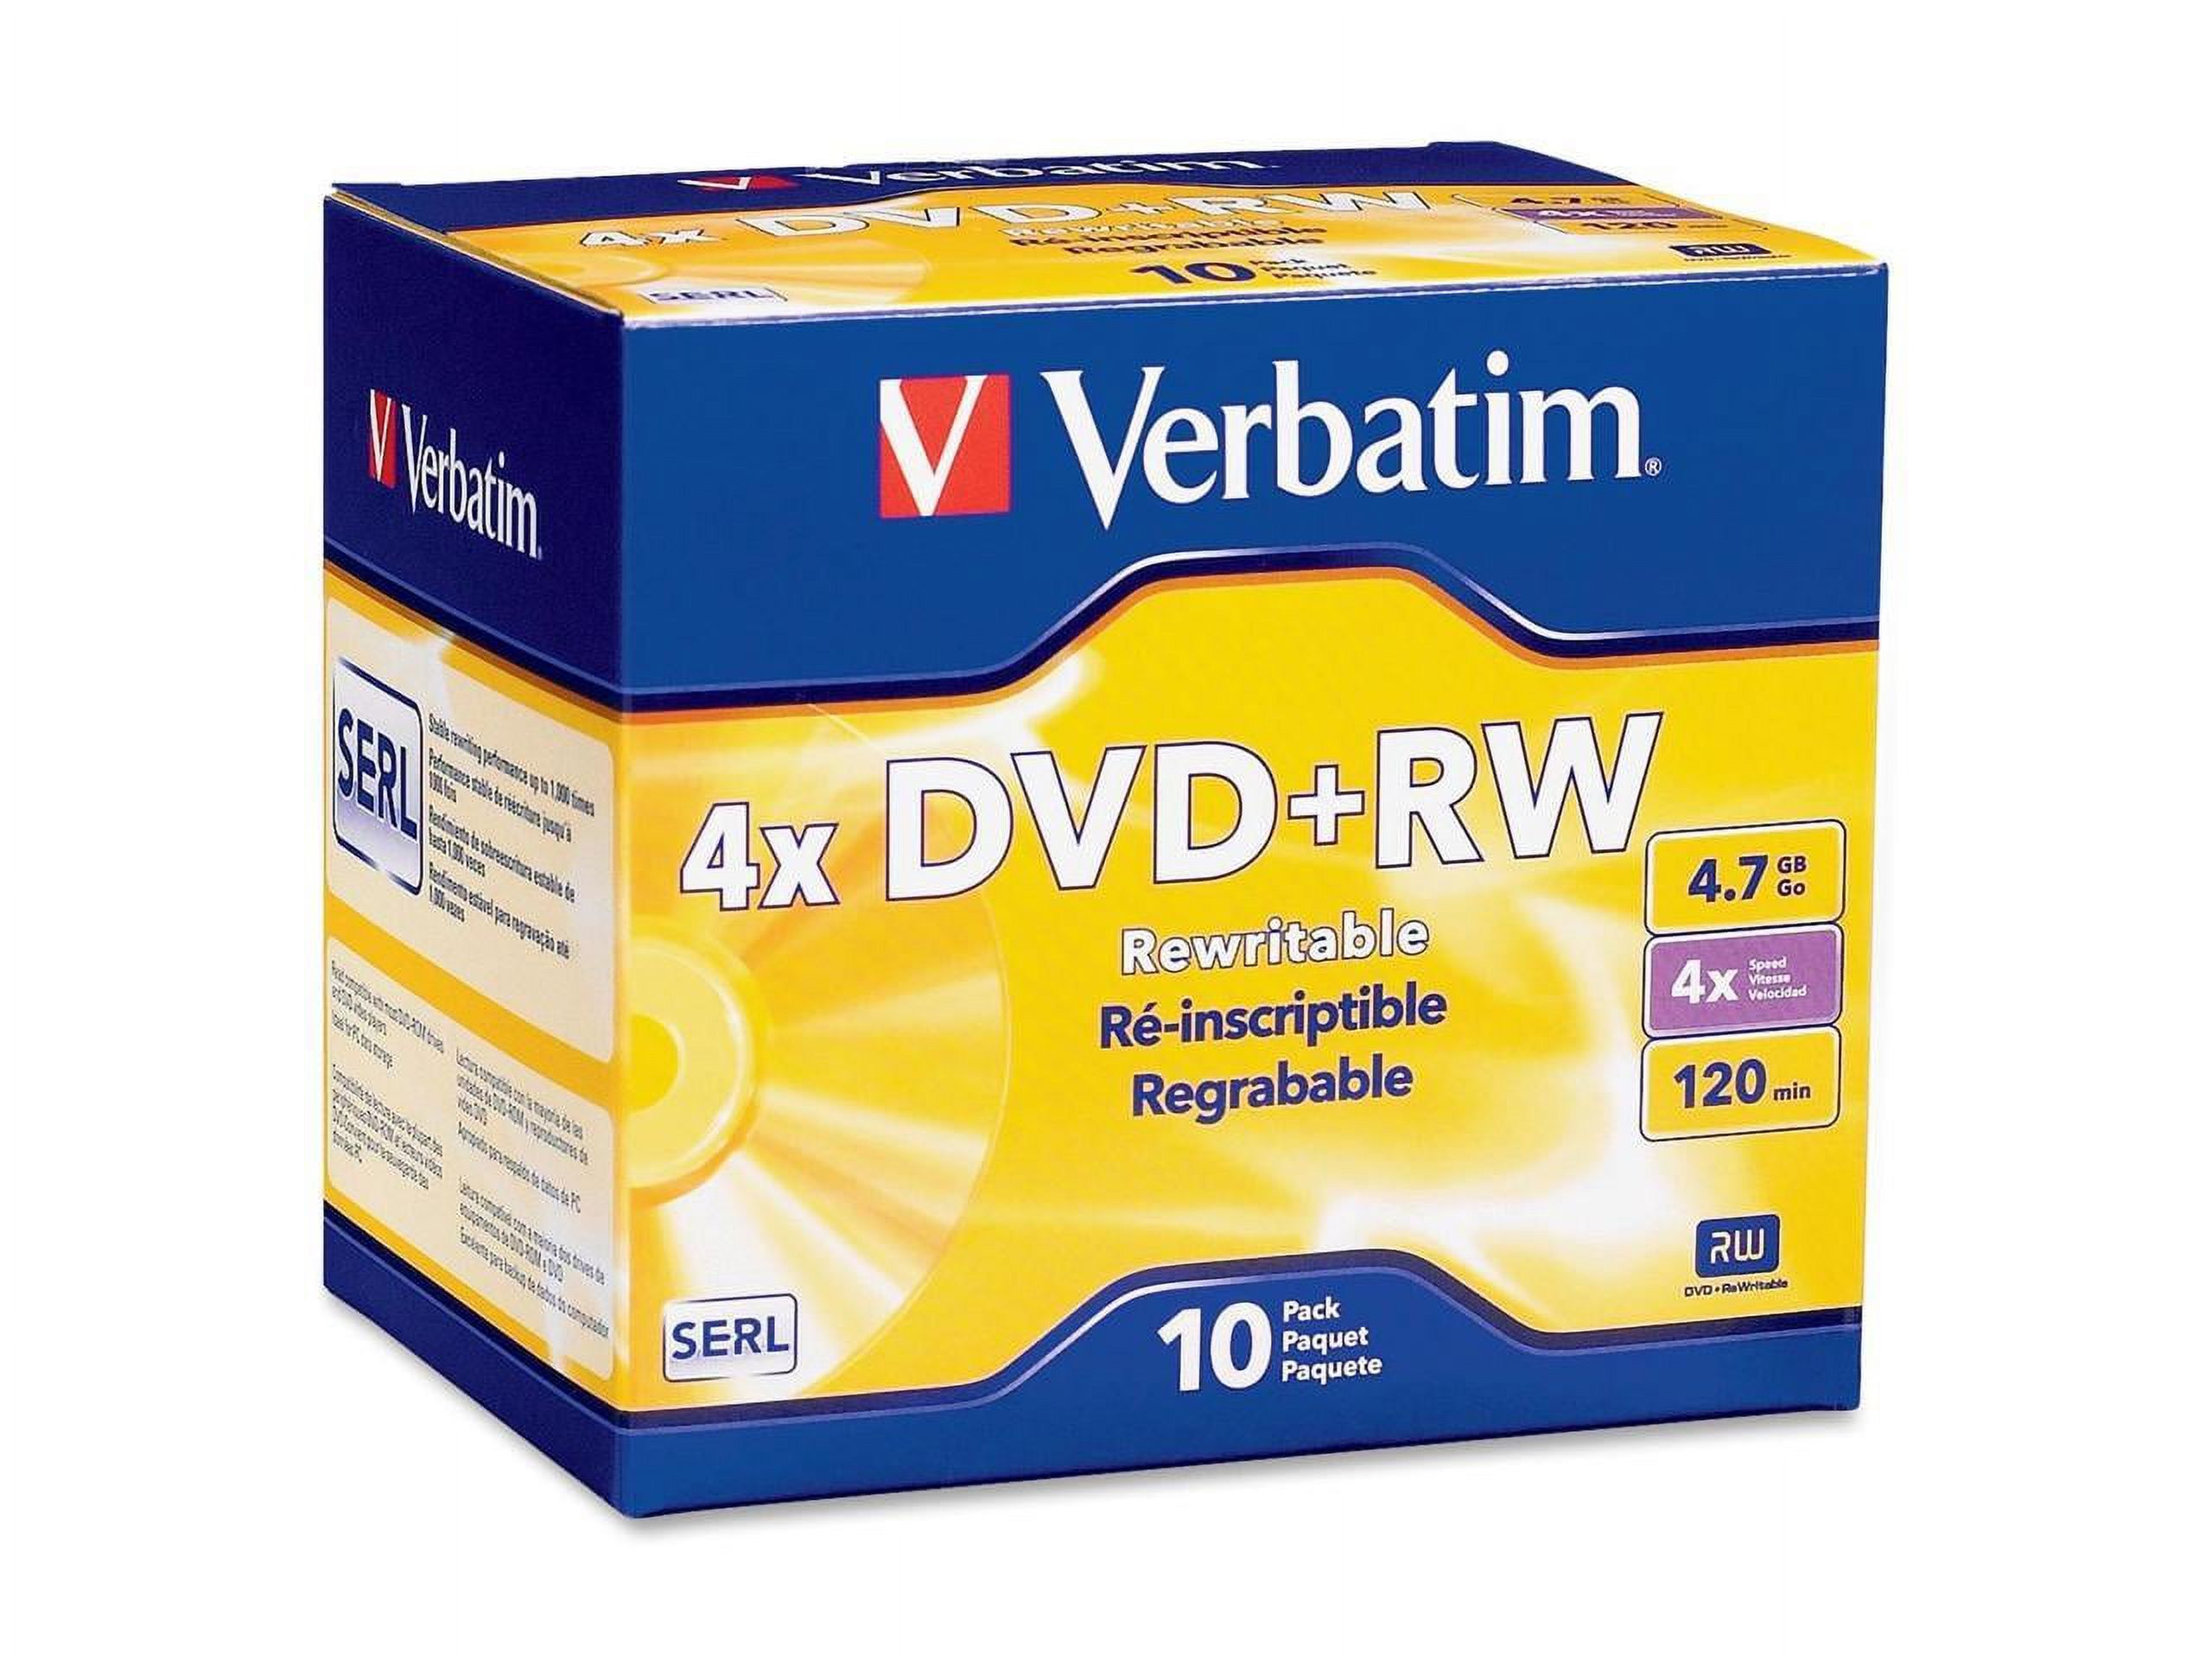 Verbatim DVD+RW 4.7GB 4X with Branded Surface - 10pk Jewel Case - 2 Hour Maximum Recording Time - image 1 of 3